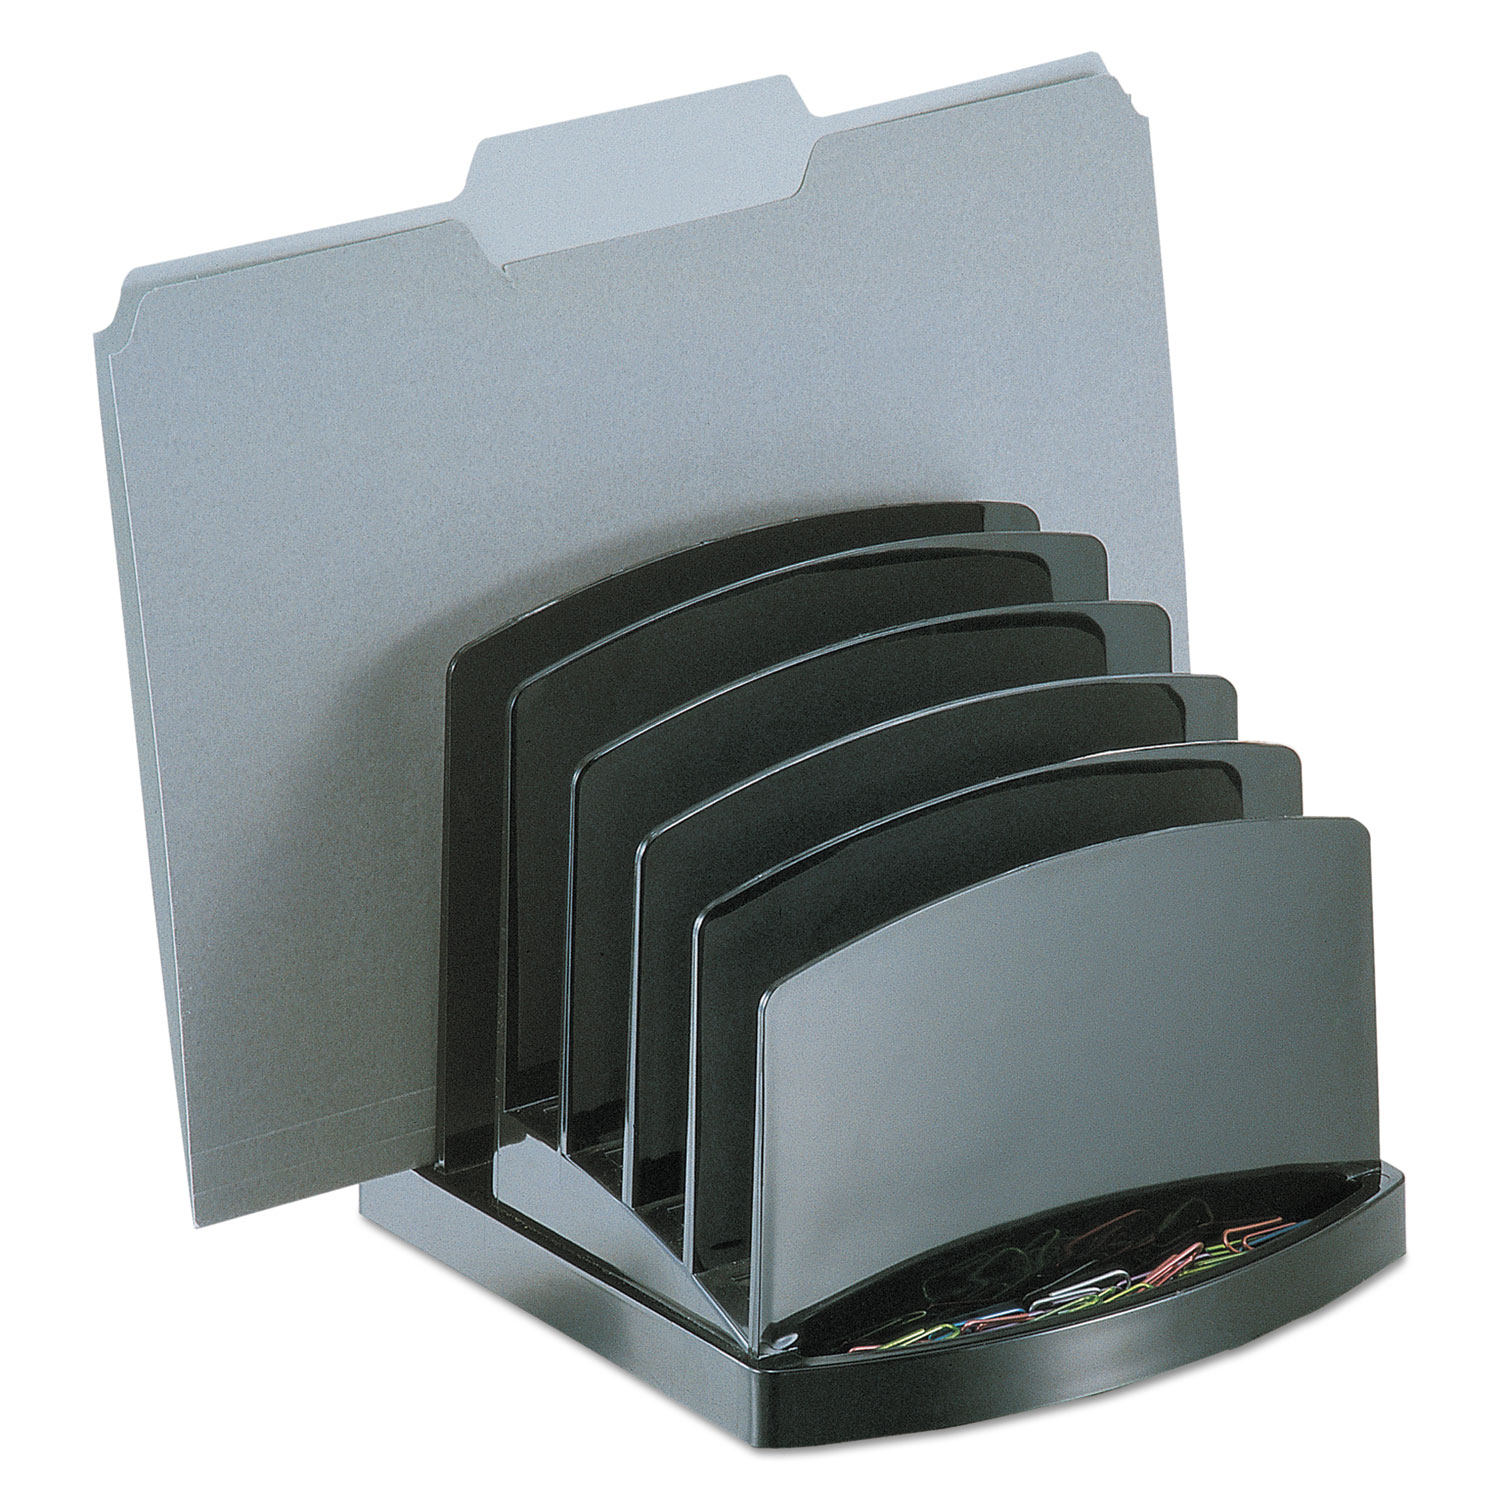 Officemate 2200 Series Incline Sorter - 6 Compartment(s) - 6.4" Height x 7.5" Width x 7.5" Depth - Desktop - Black - Plastic - 1